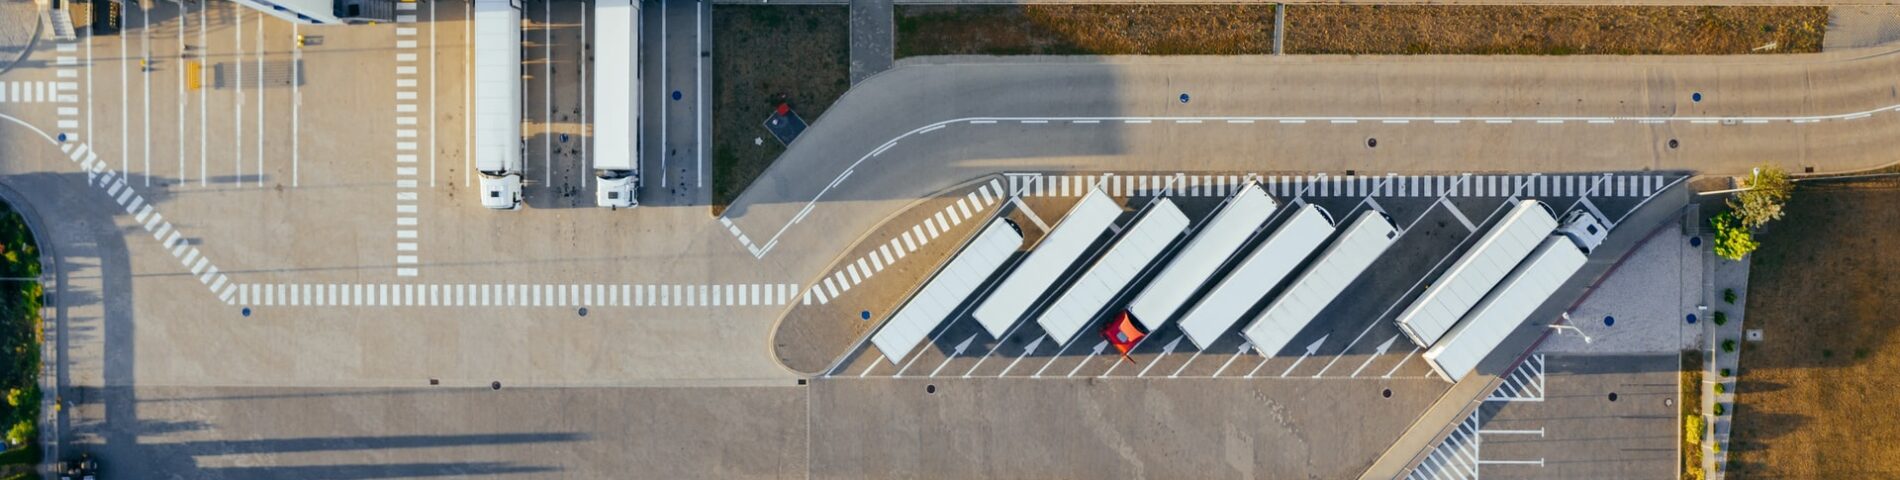 distribution center aerial view